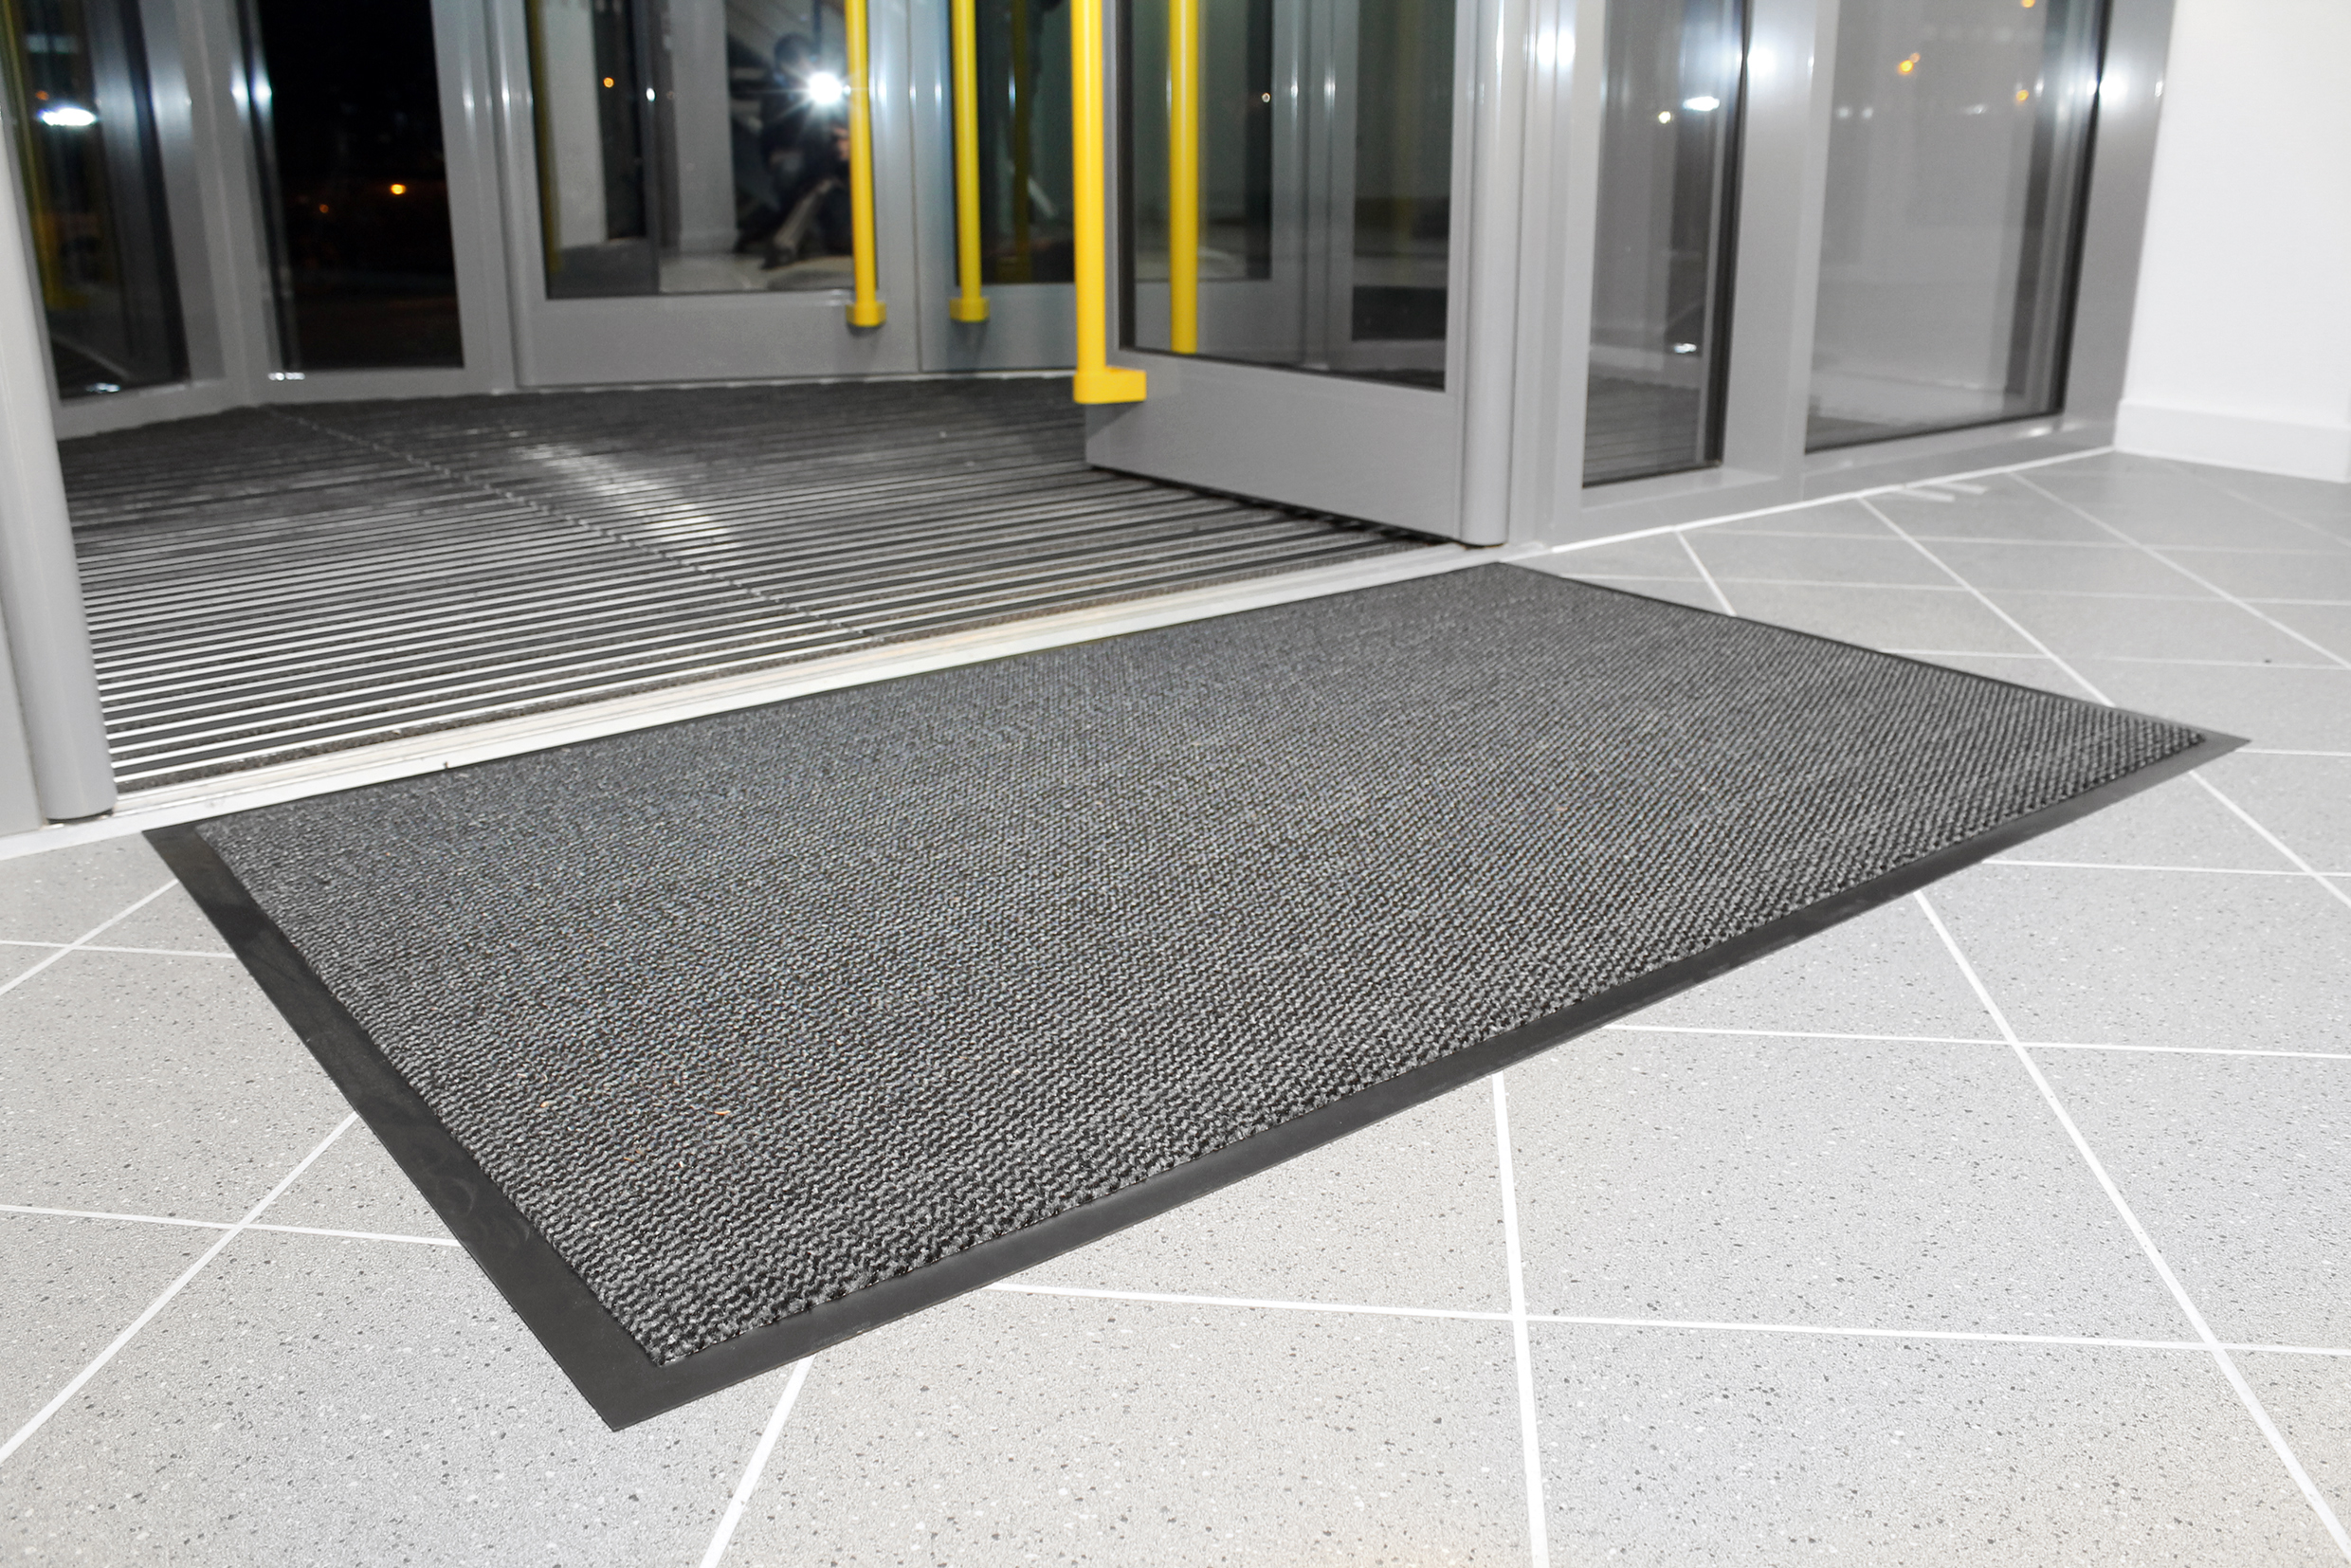 Steel coloured Plush Doormat outside building entrance